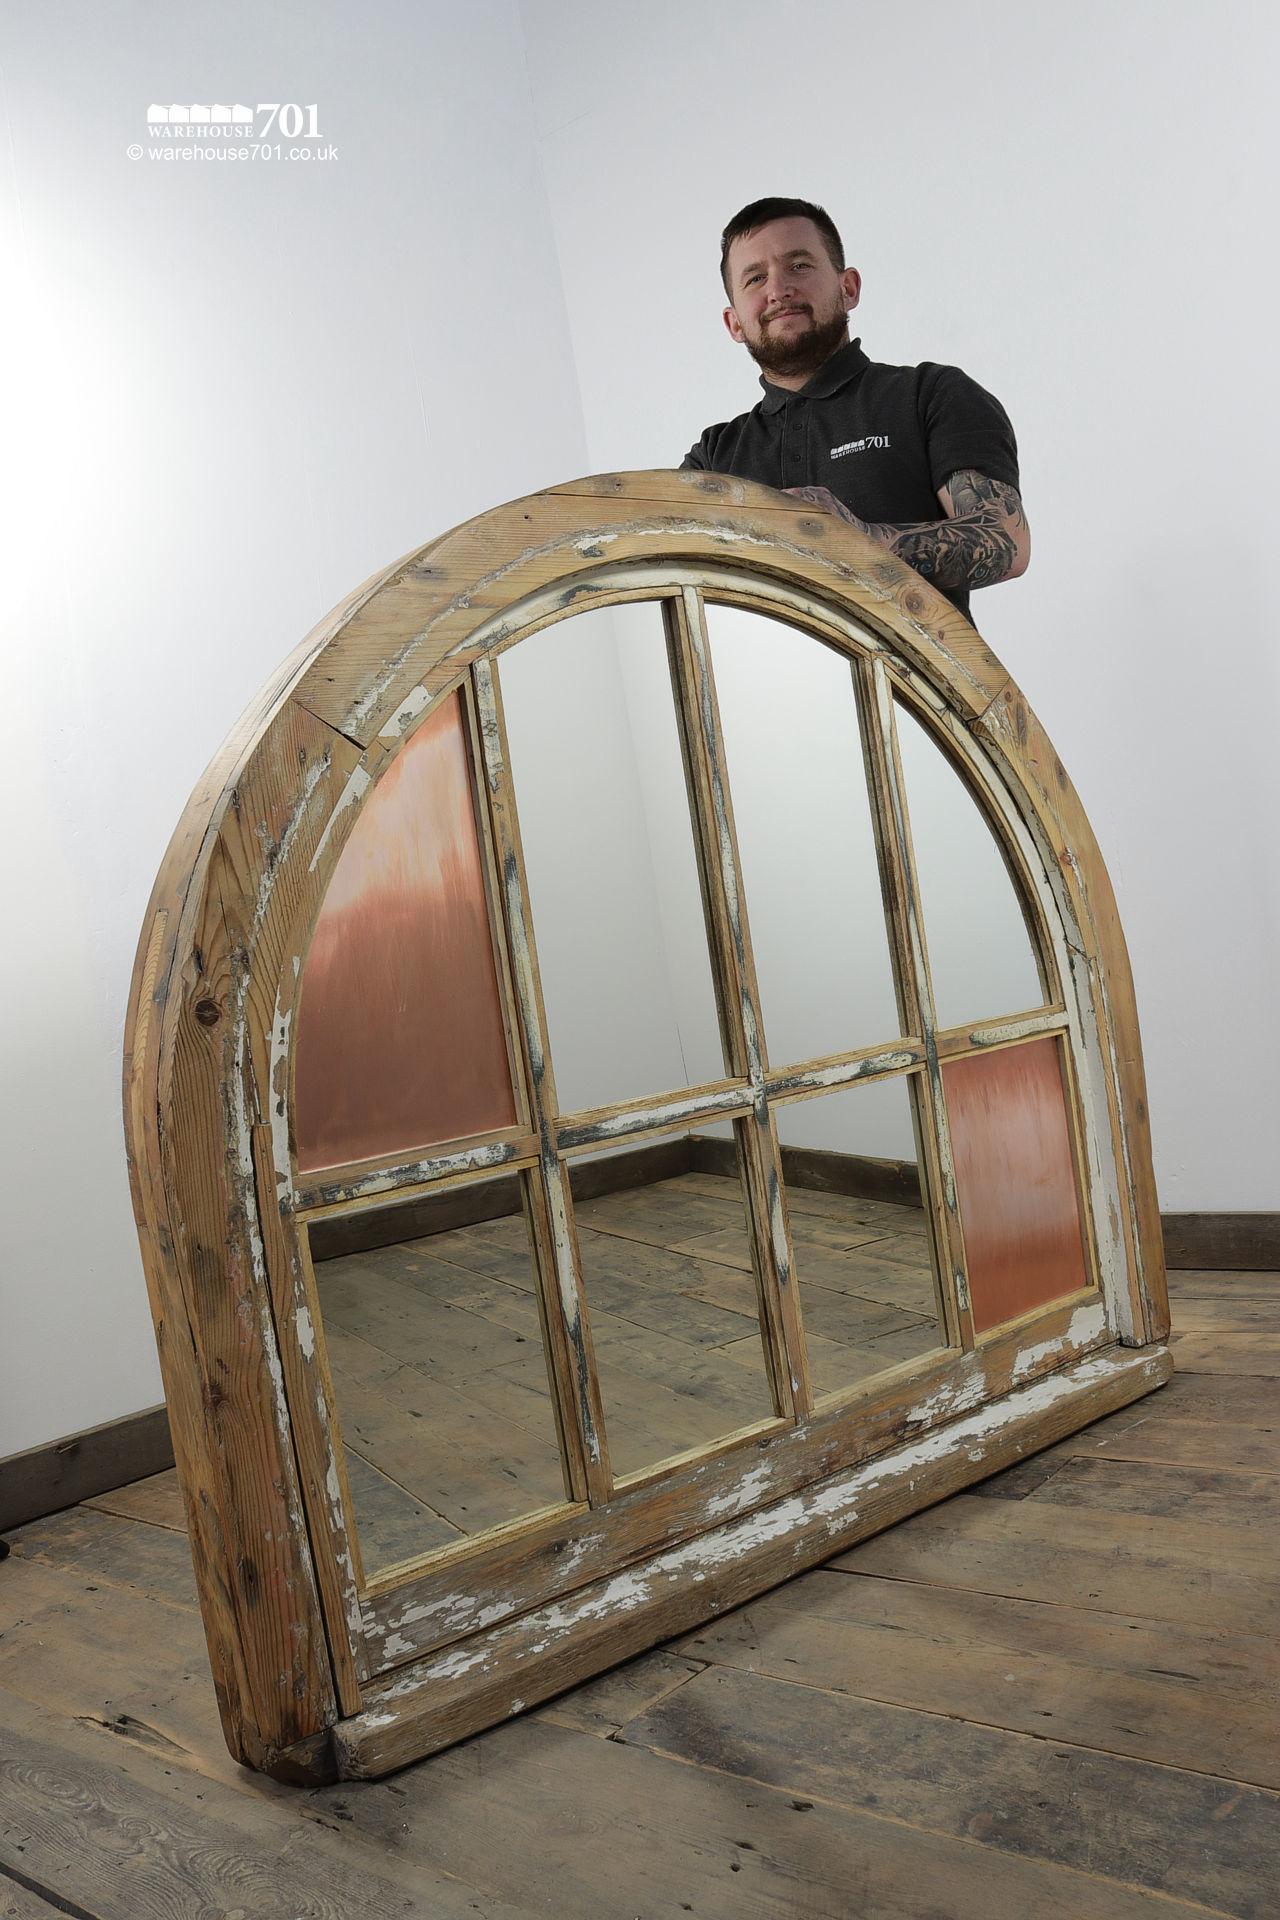 Impressive Architectural Copper and Wood Window Mirror #2